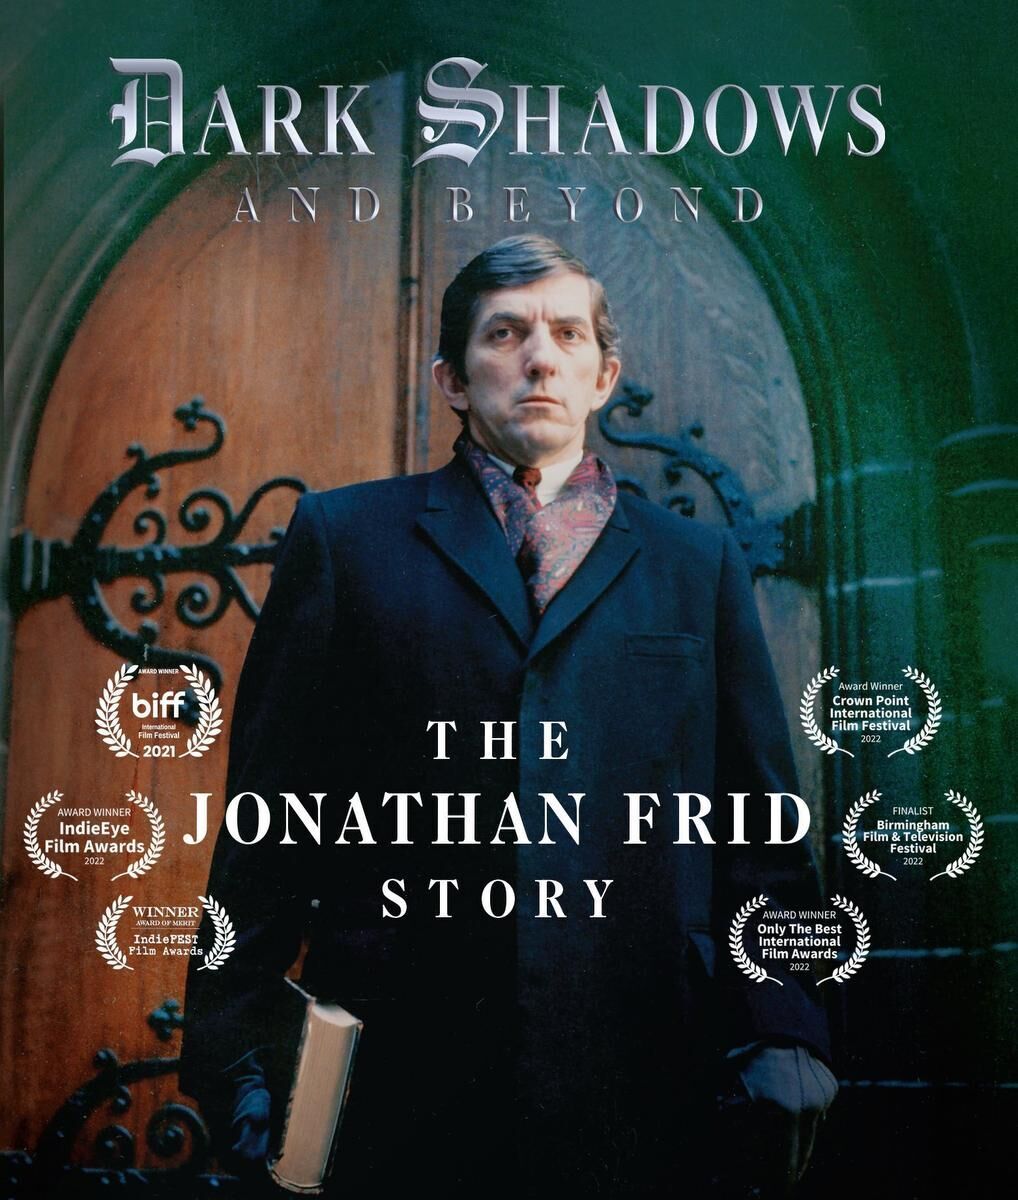 Frid was best known for 'Dark Shadows' role